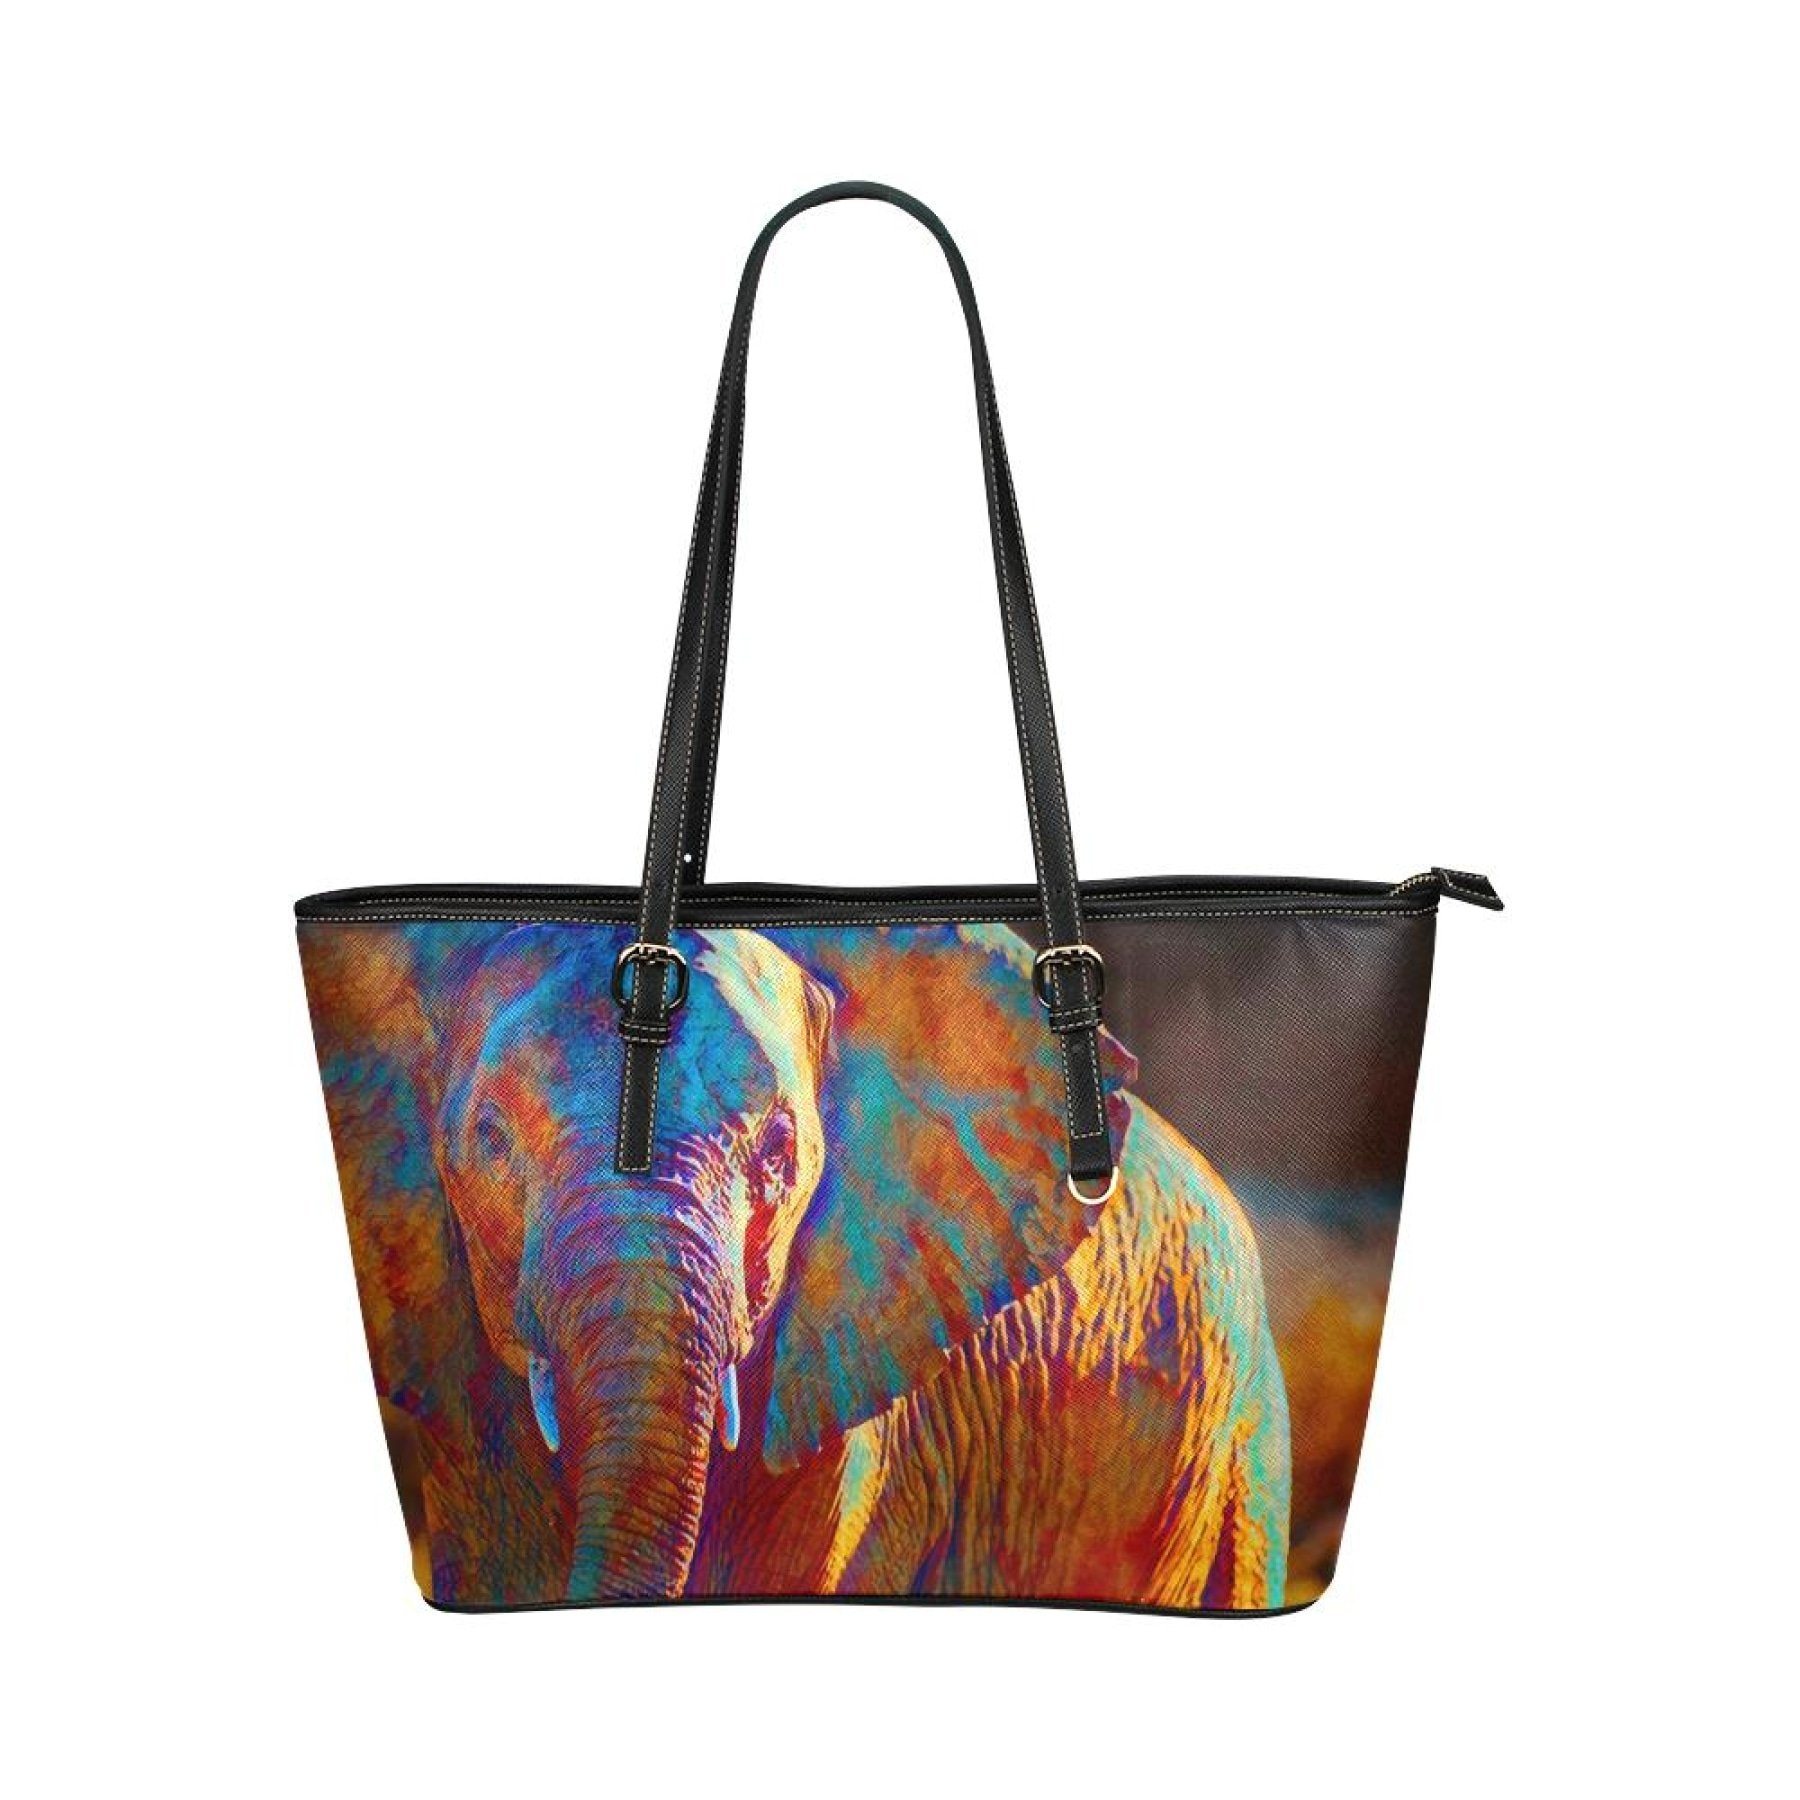 Designer Tote Bags, Colorful Elephant Art Leather Bag 9